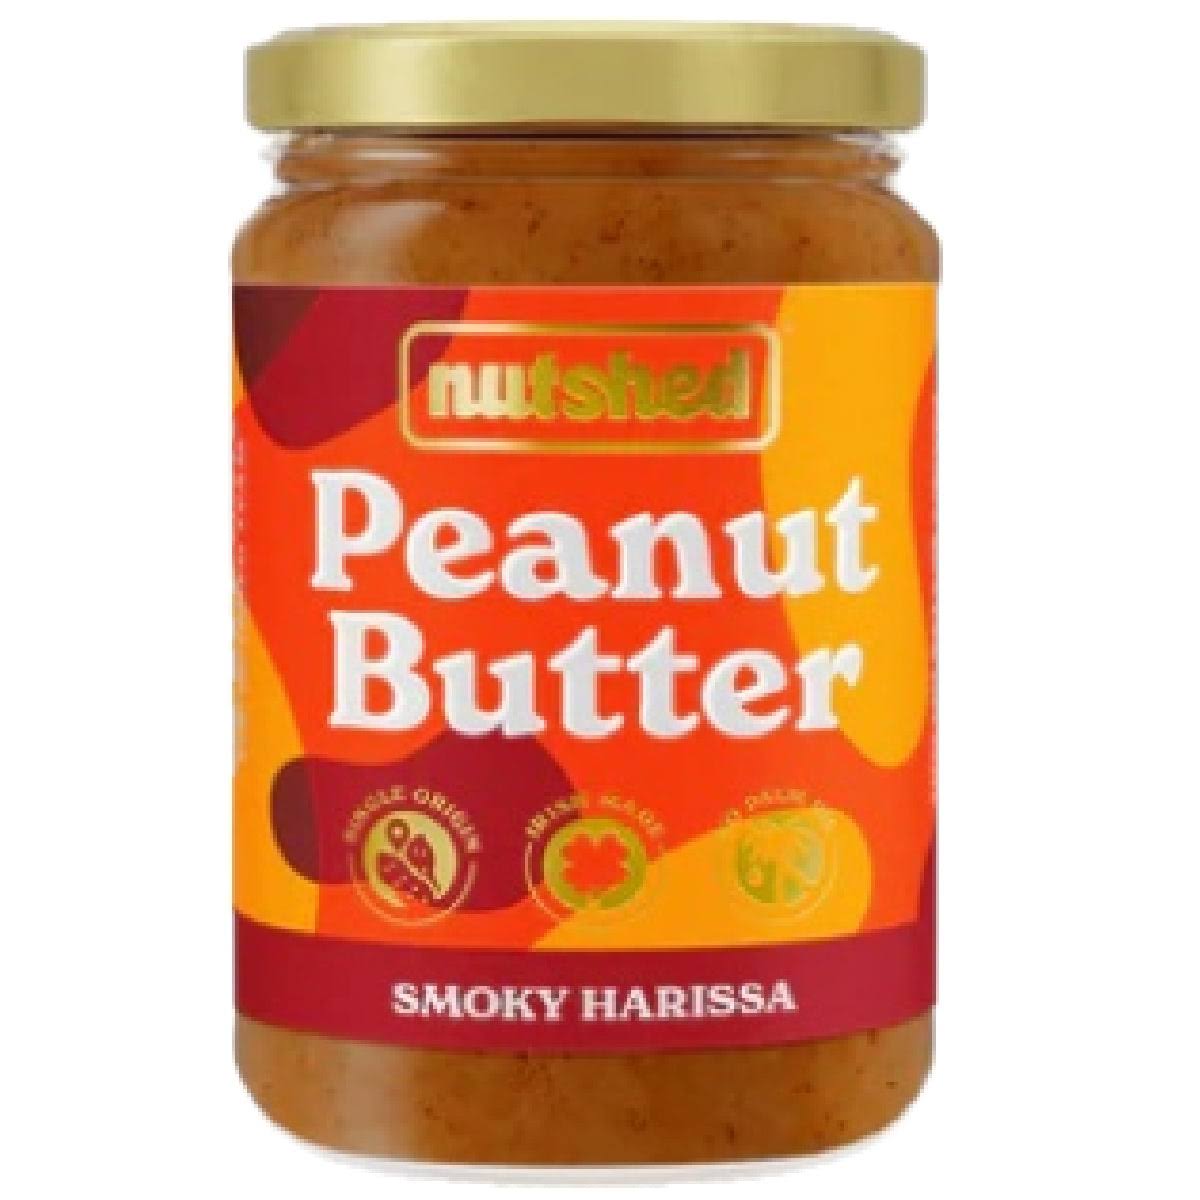 NutShed Harissa Chilli Peanut Butter | Evergreen Healthfoods 290g